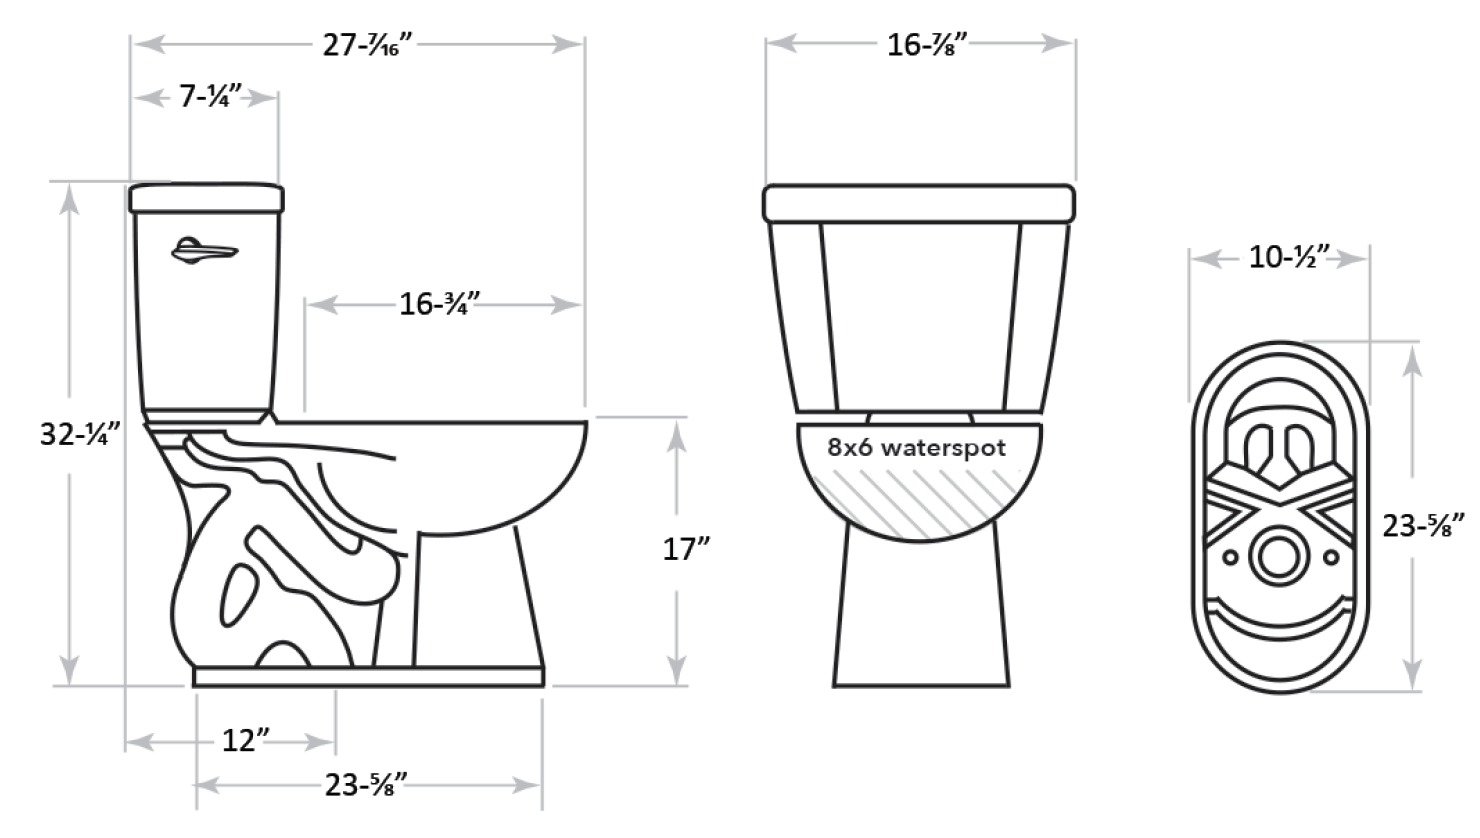 Sabre 1.28 GPF ADA toilet technical info